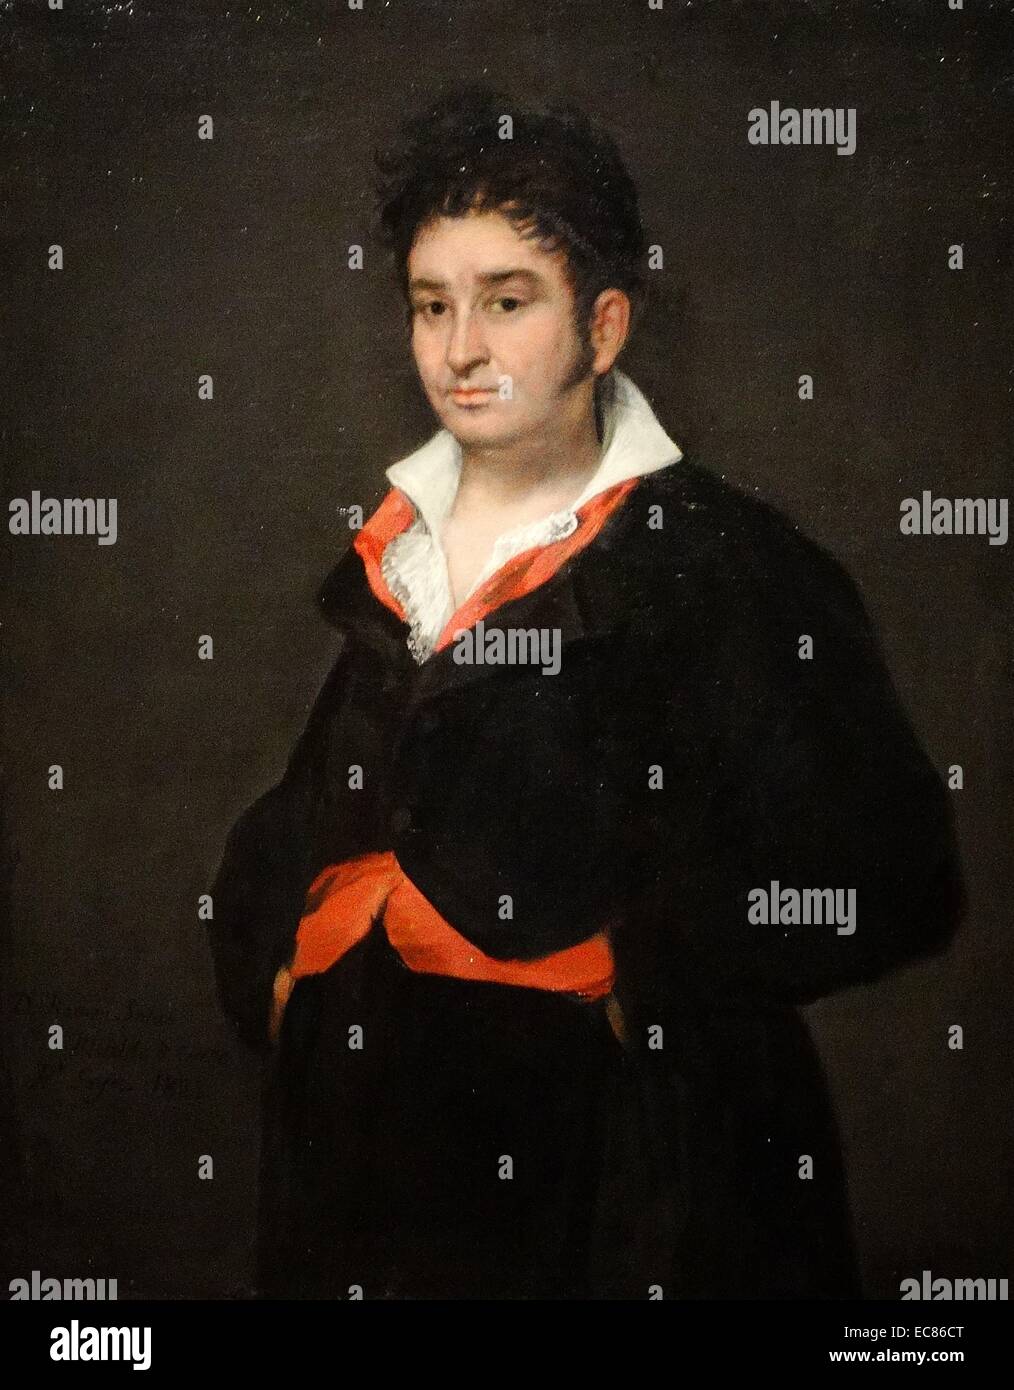 Ritratto di Don Ramón Satué. Dipinto da Francisco José de Goya y Lucientes (1746-1828) Spagnolo romantico pittore e incisore. Datata 1823 Foto Stock